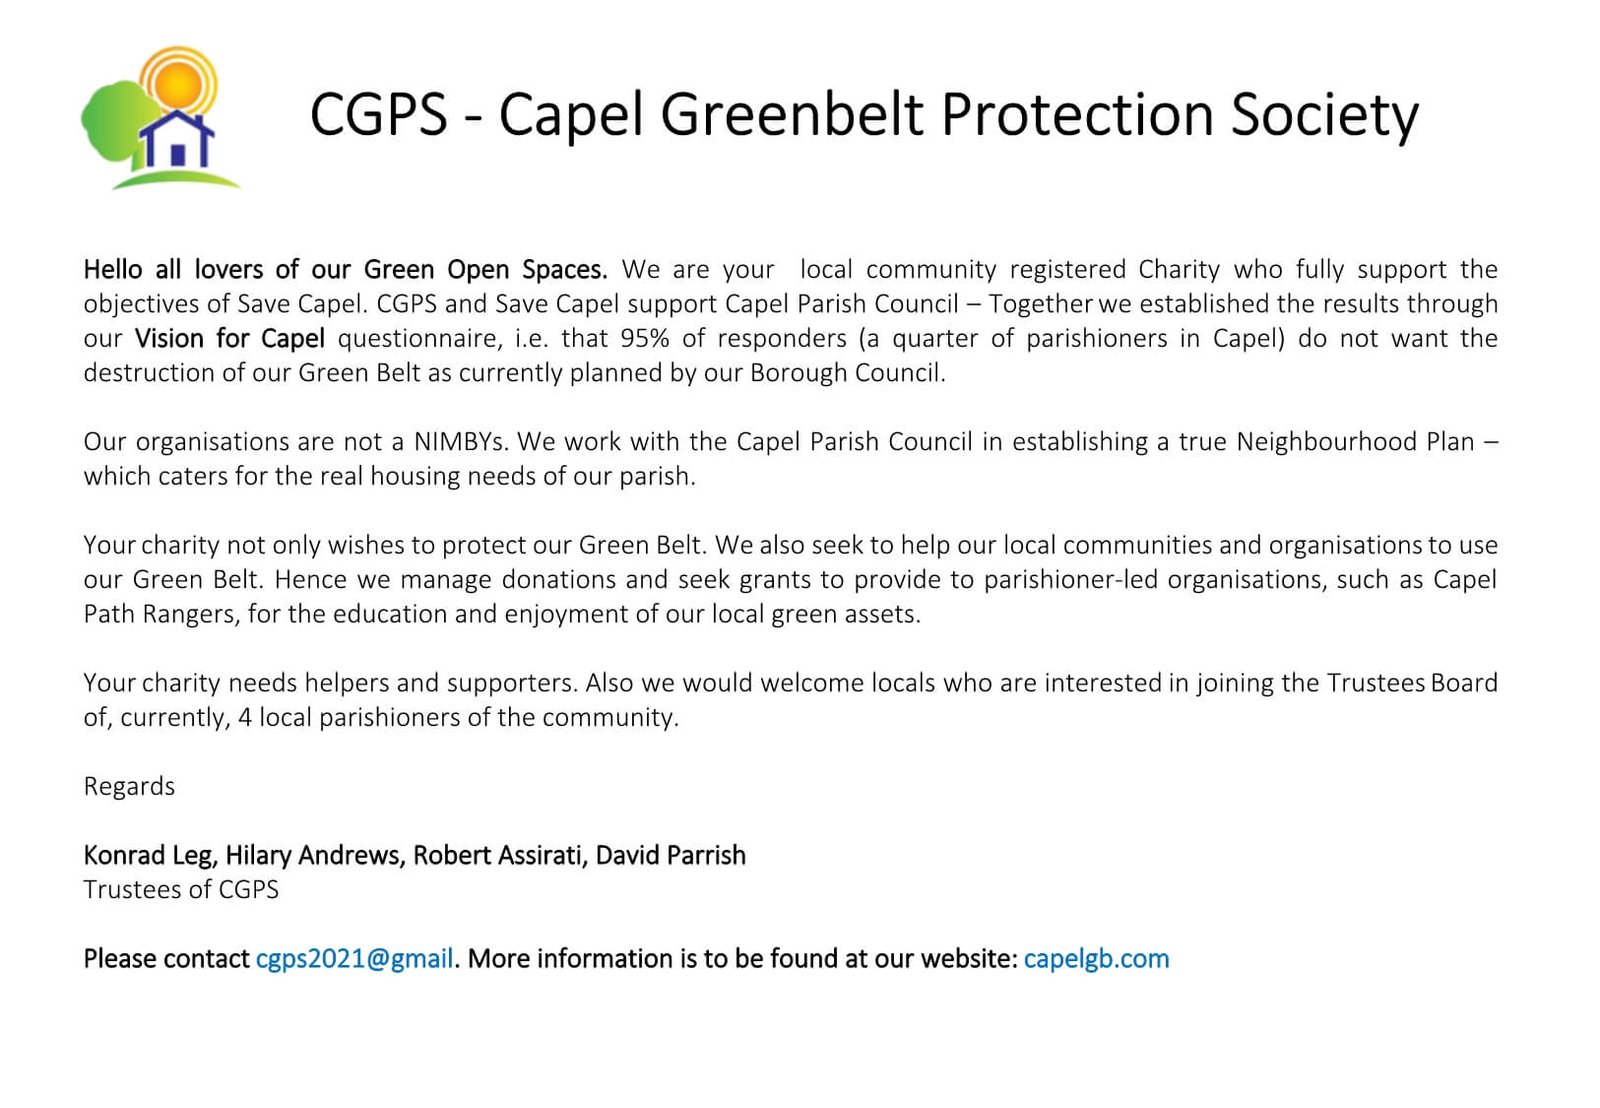 Capel Greenbelt Protection Society slide